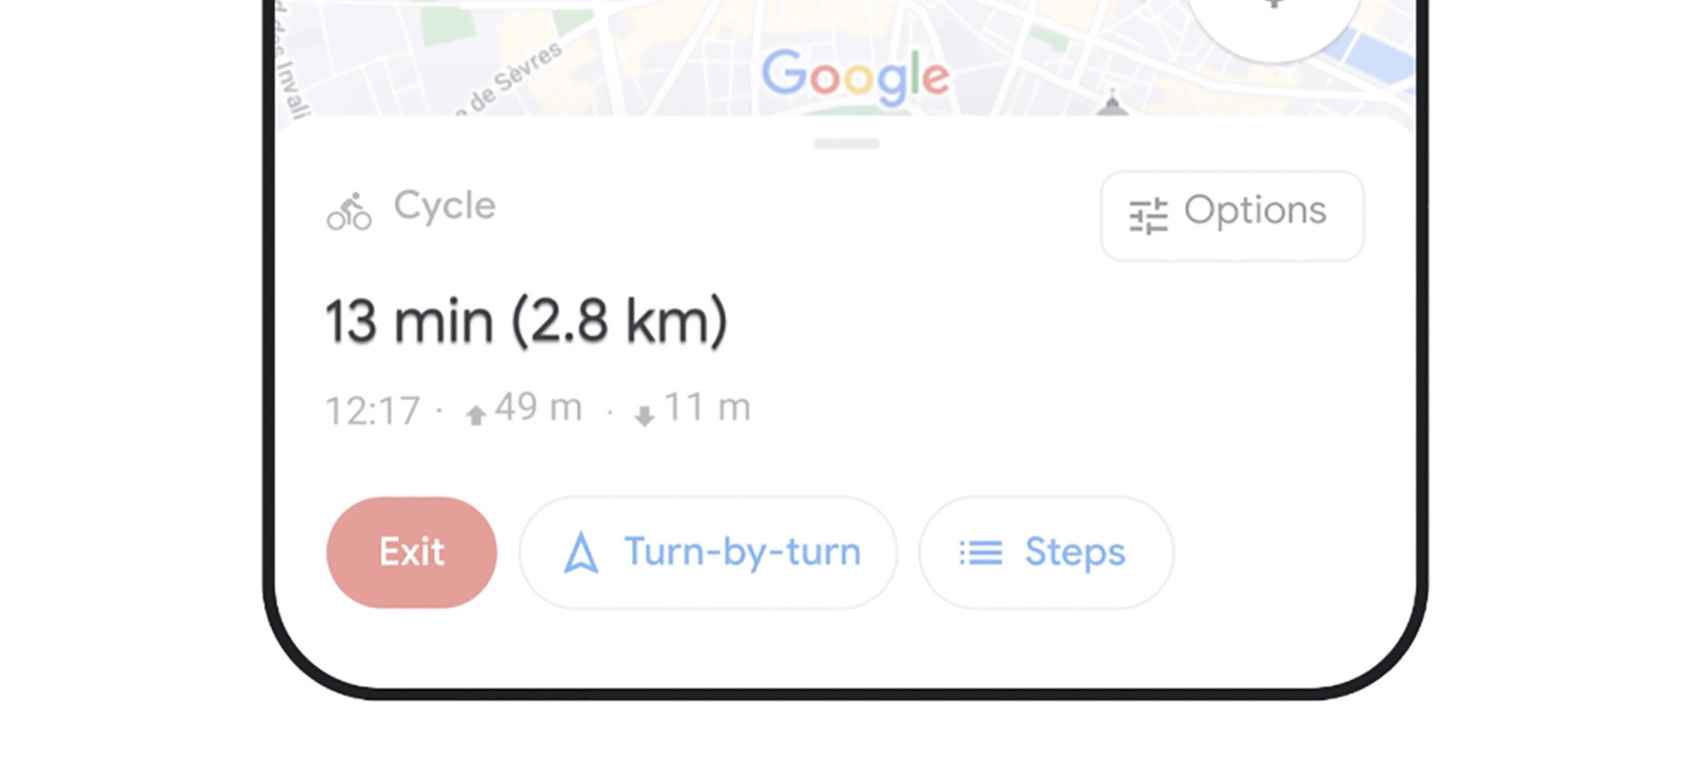 Ruta en bici adaptada en Google Maps